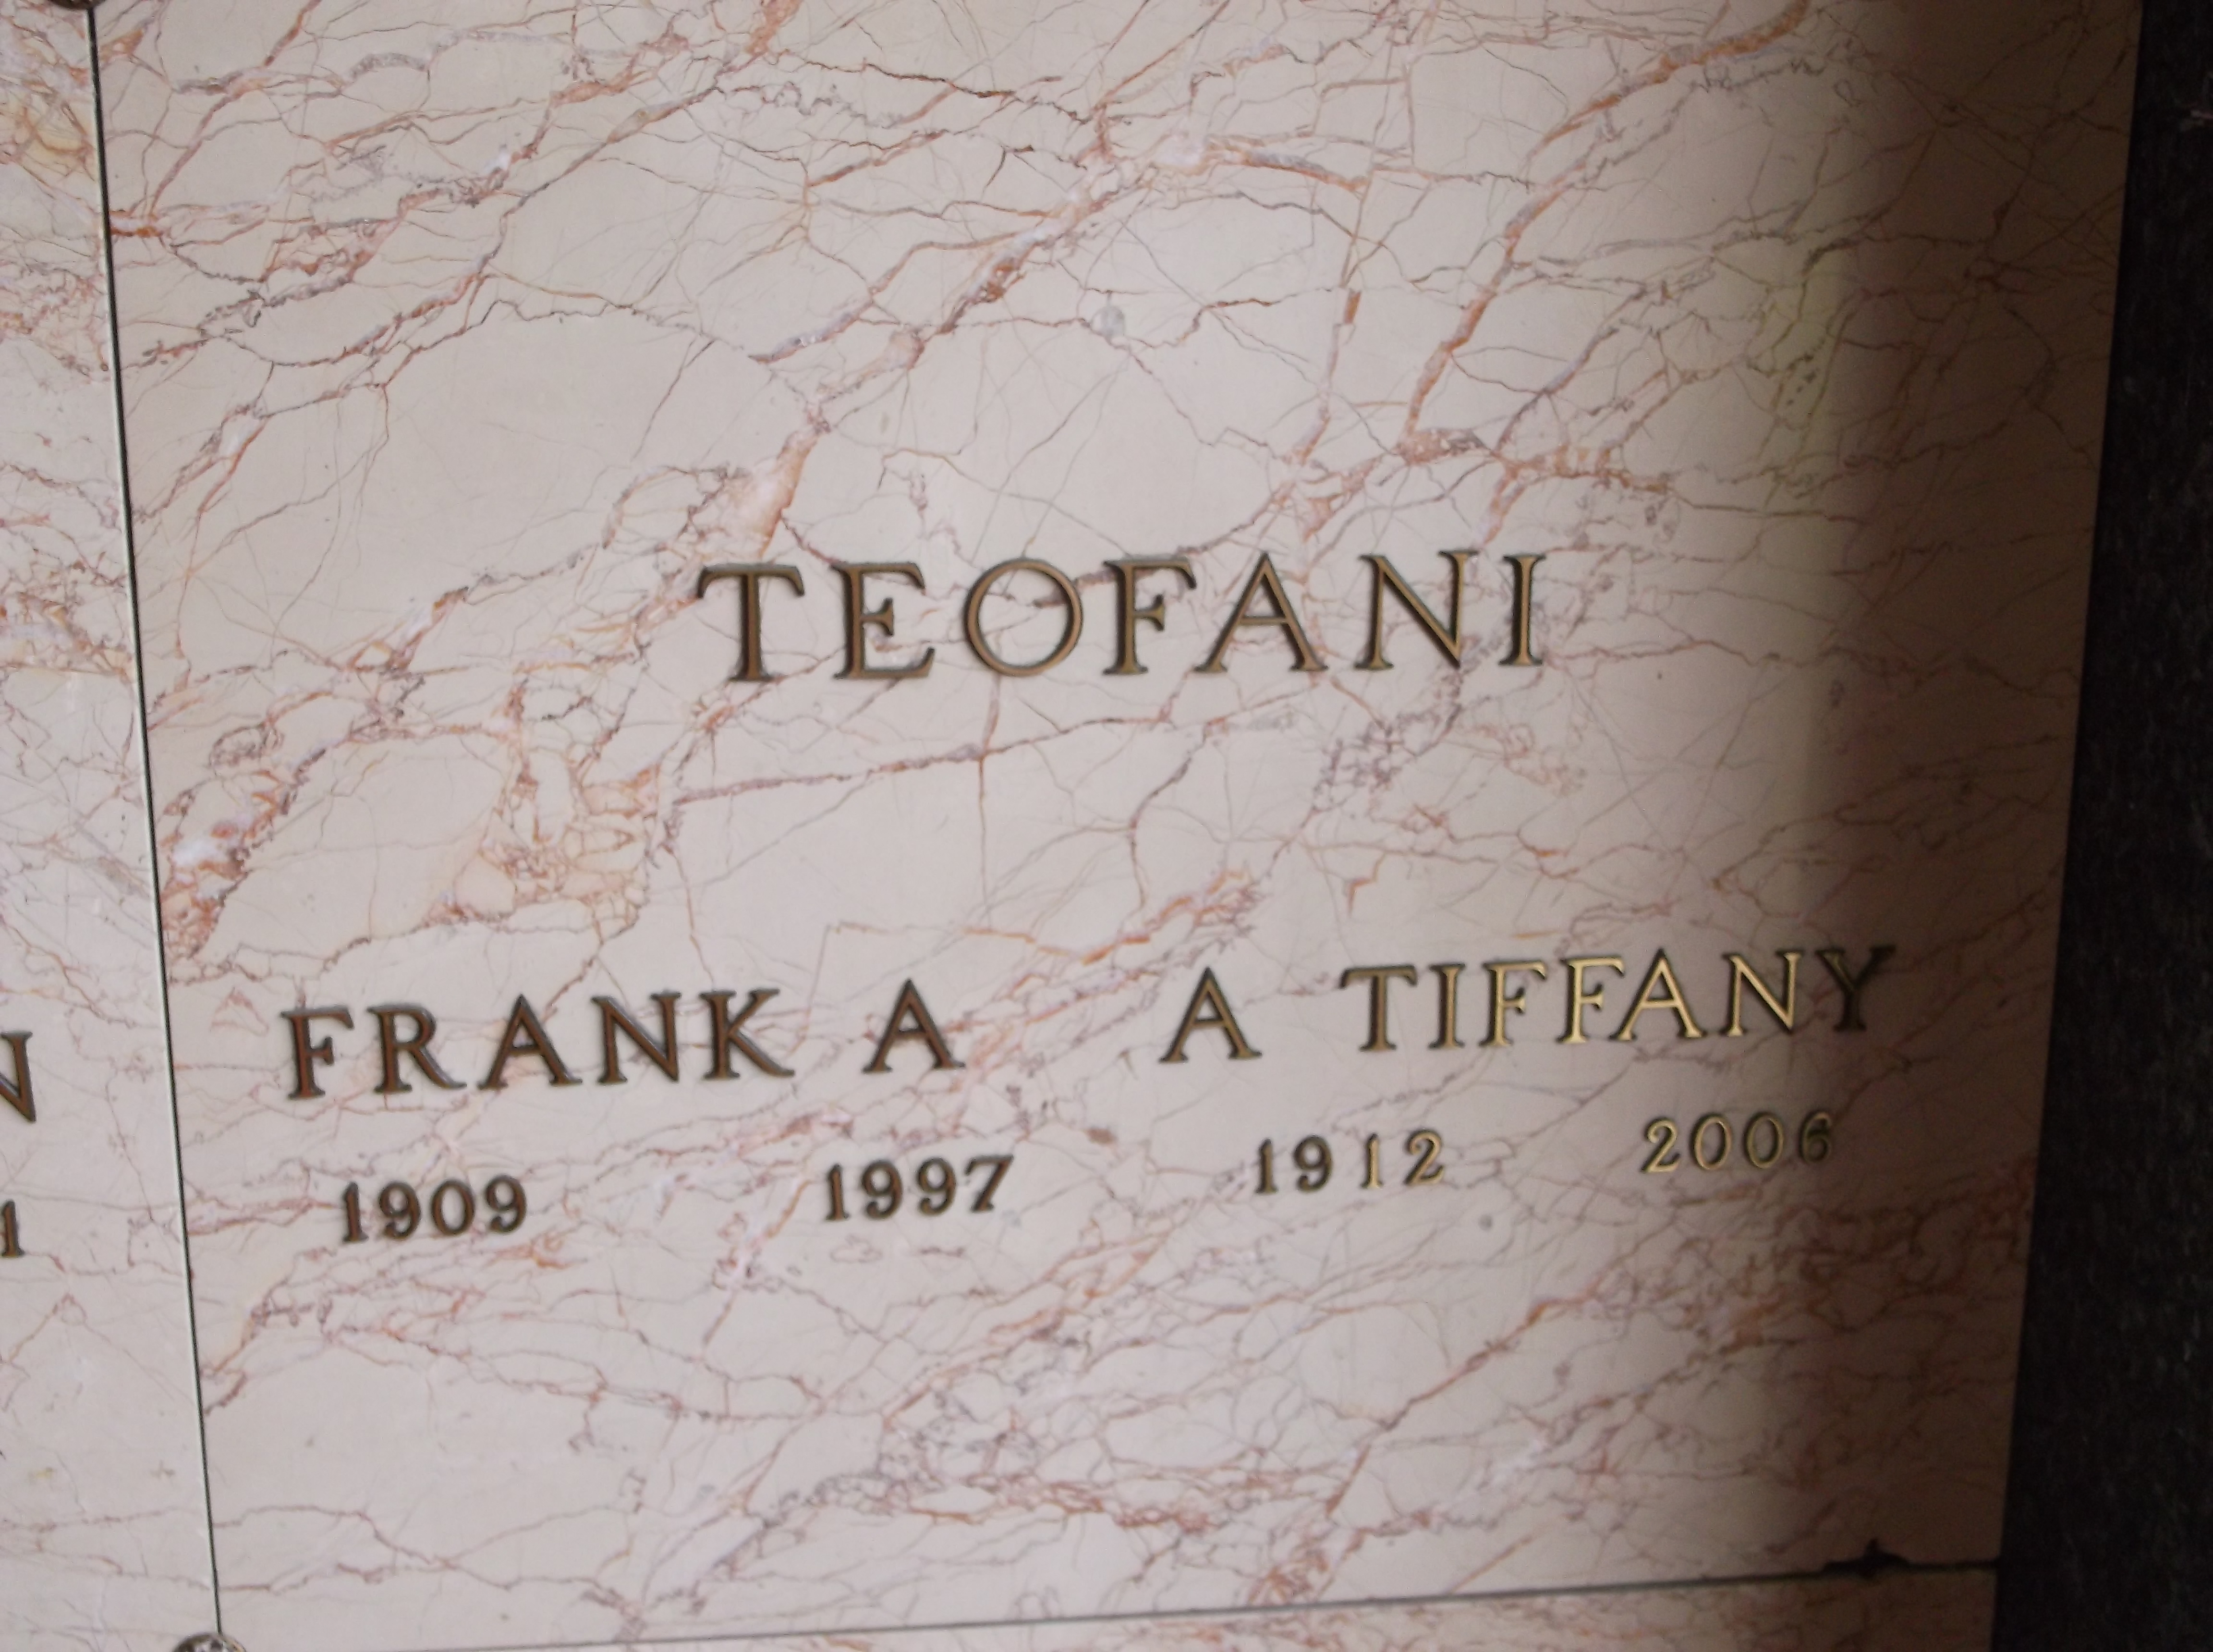 A Tiffany Teofani